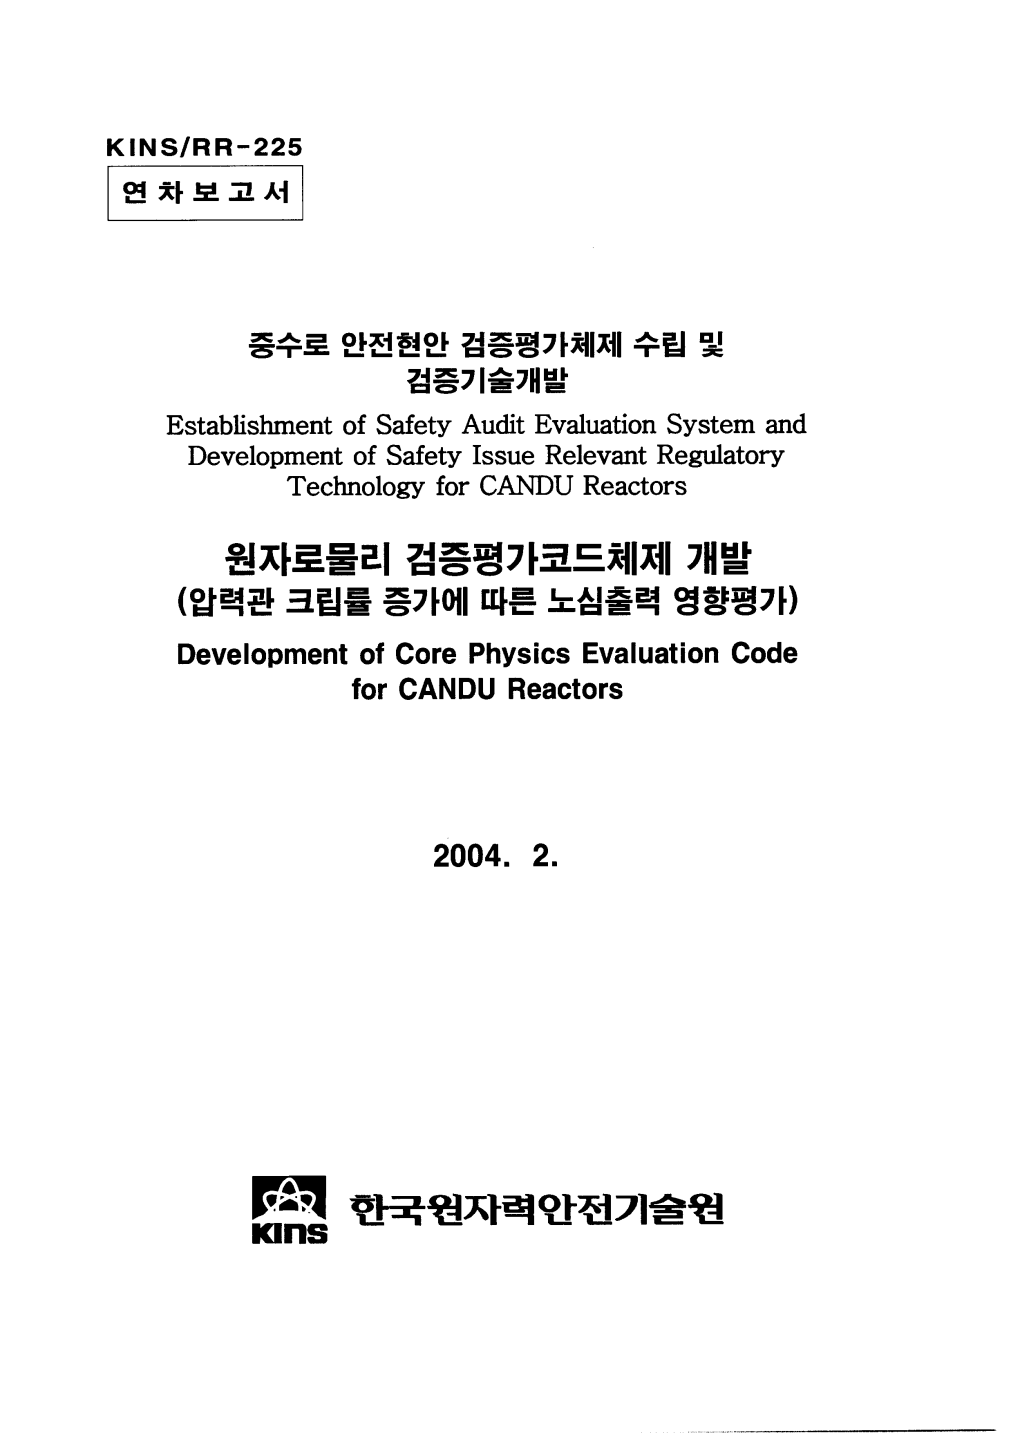 Development of Core Physics Evaluation Code for CANDU Reactors